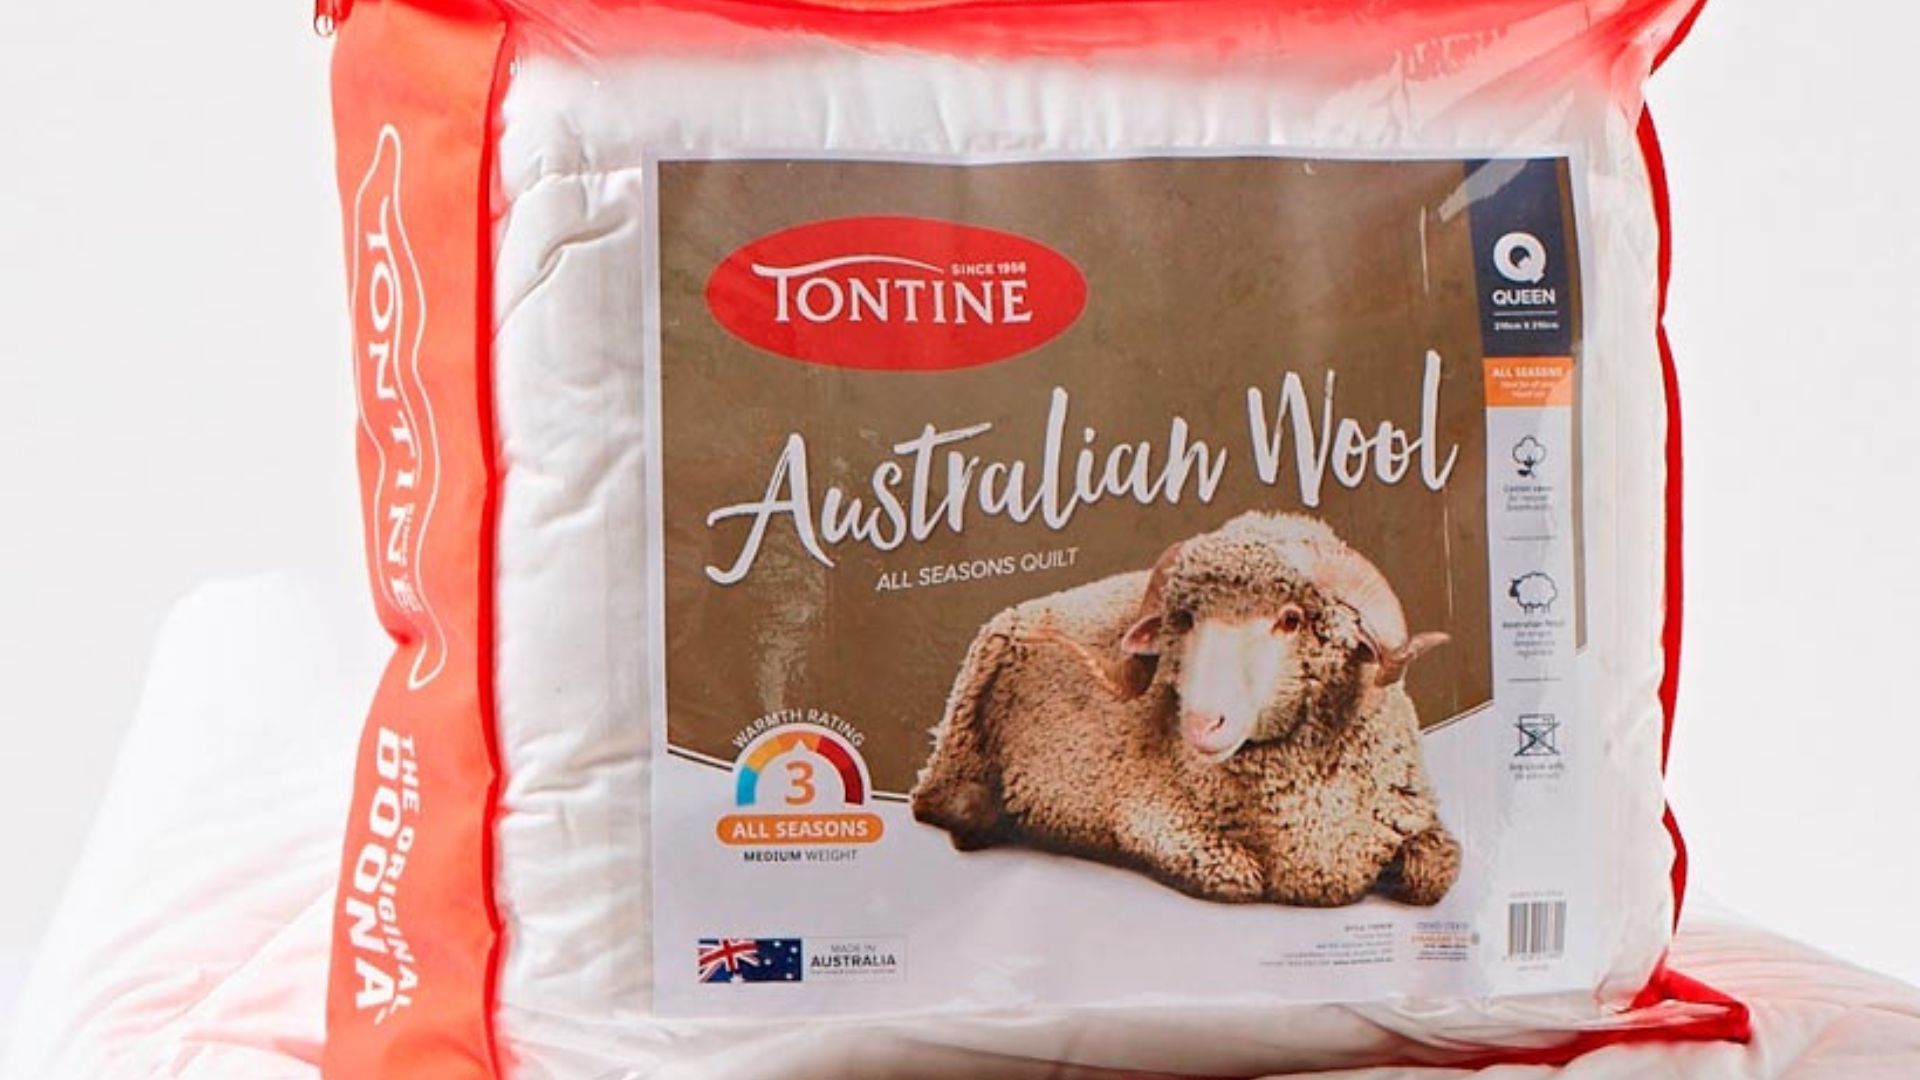 Tontine Australian Wool Medium Weight All Seasons Quilt